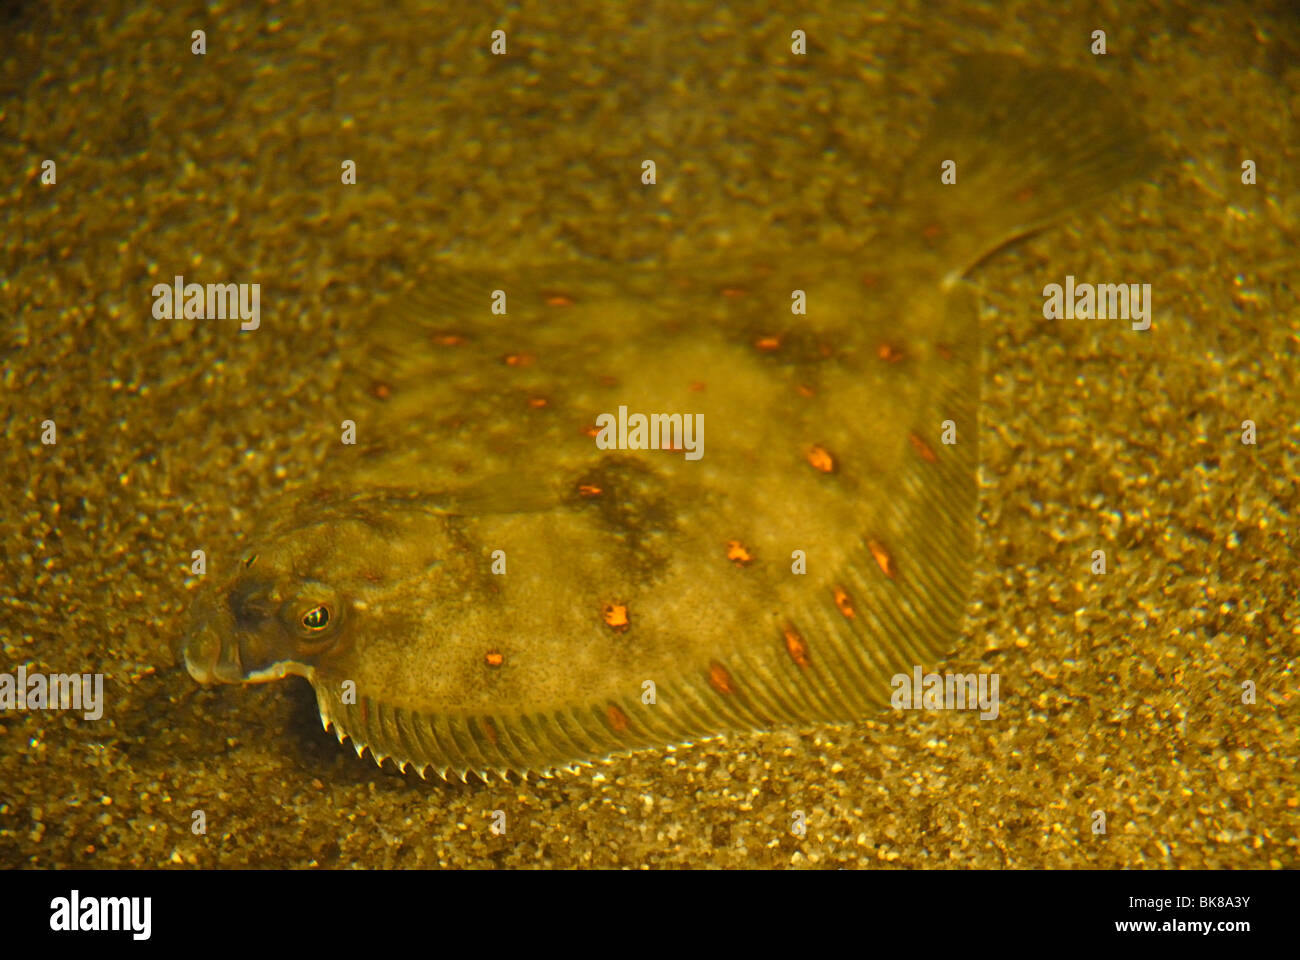 European plaice, flatfish (Pleuronectes platessa) Stock Photo